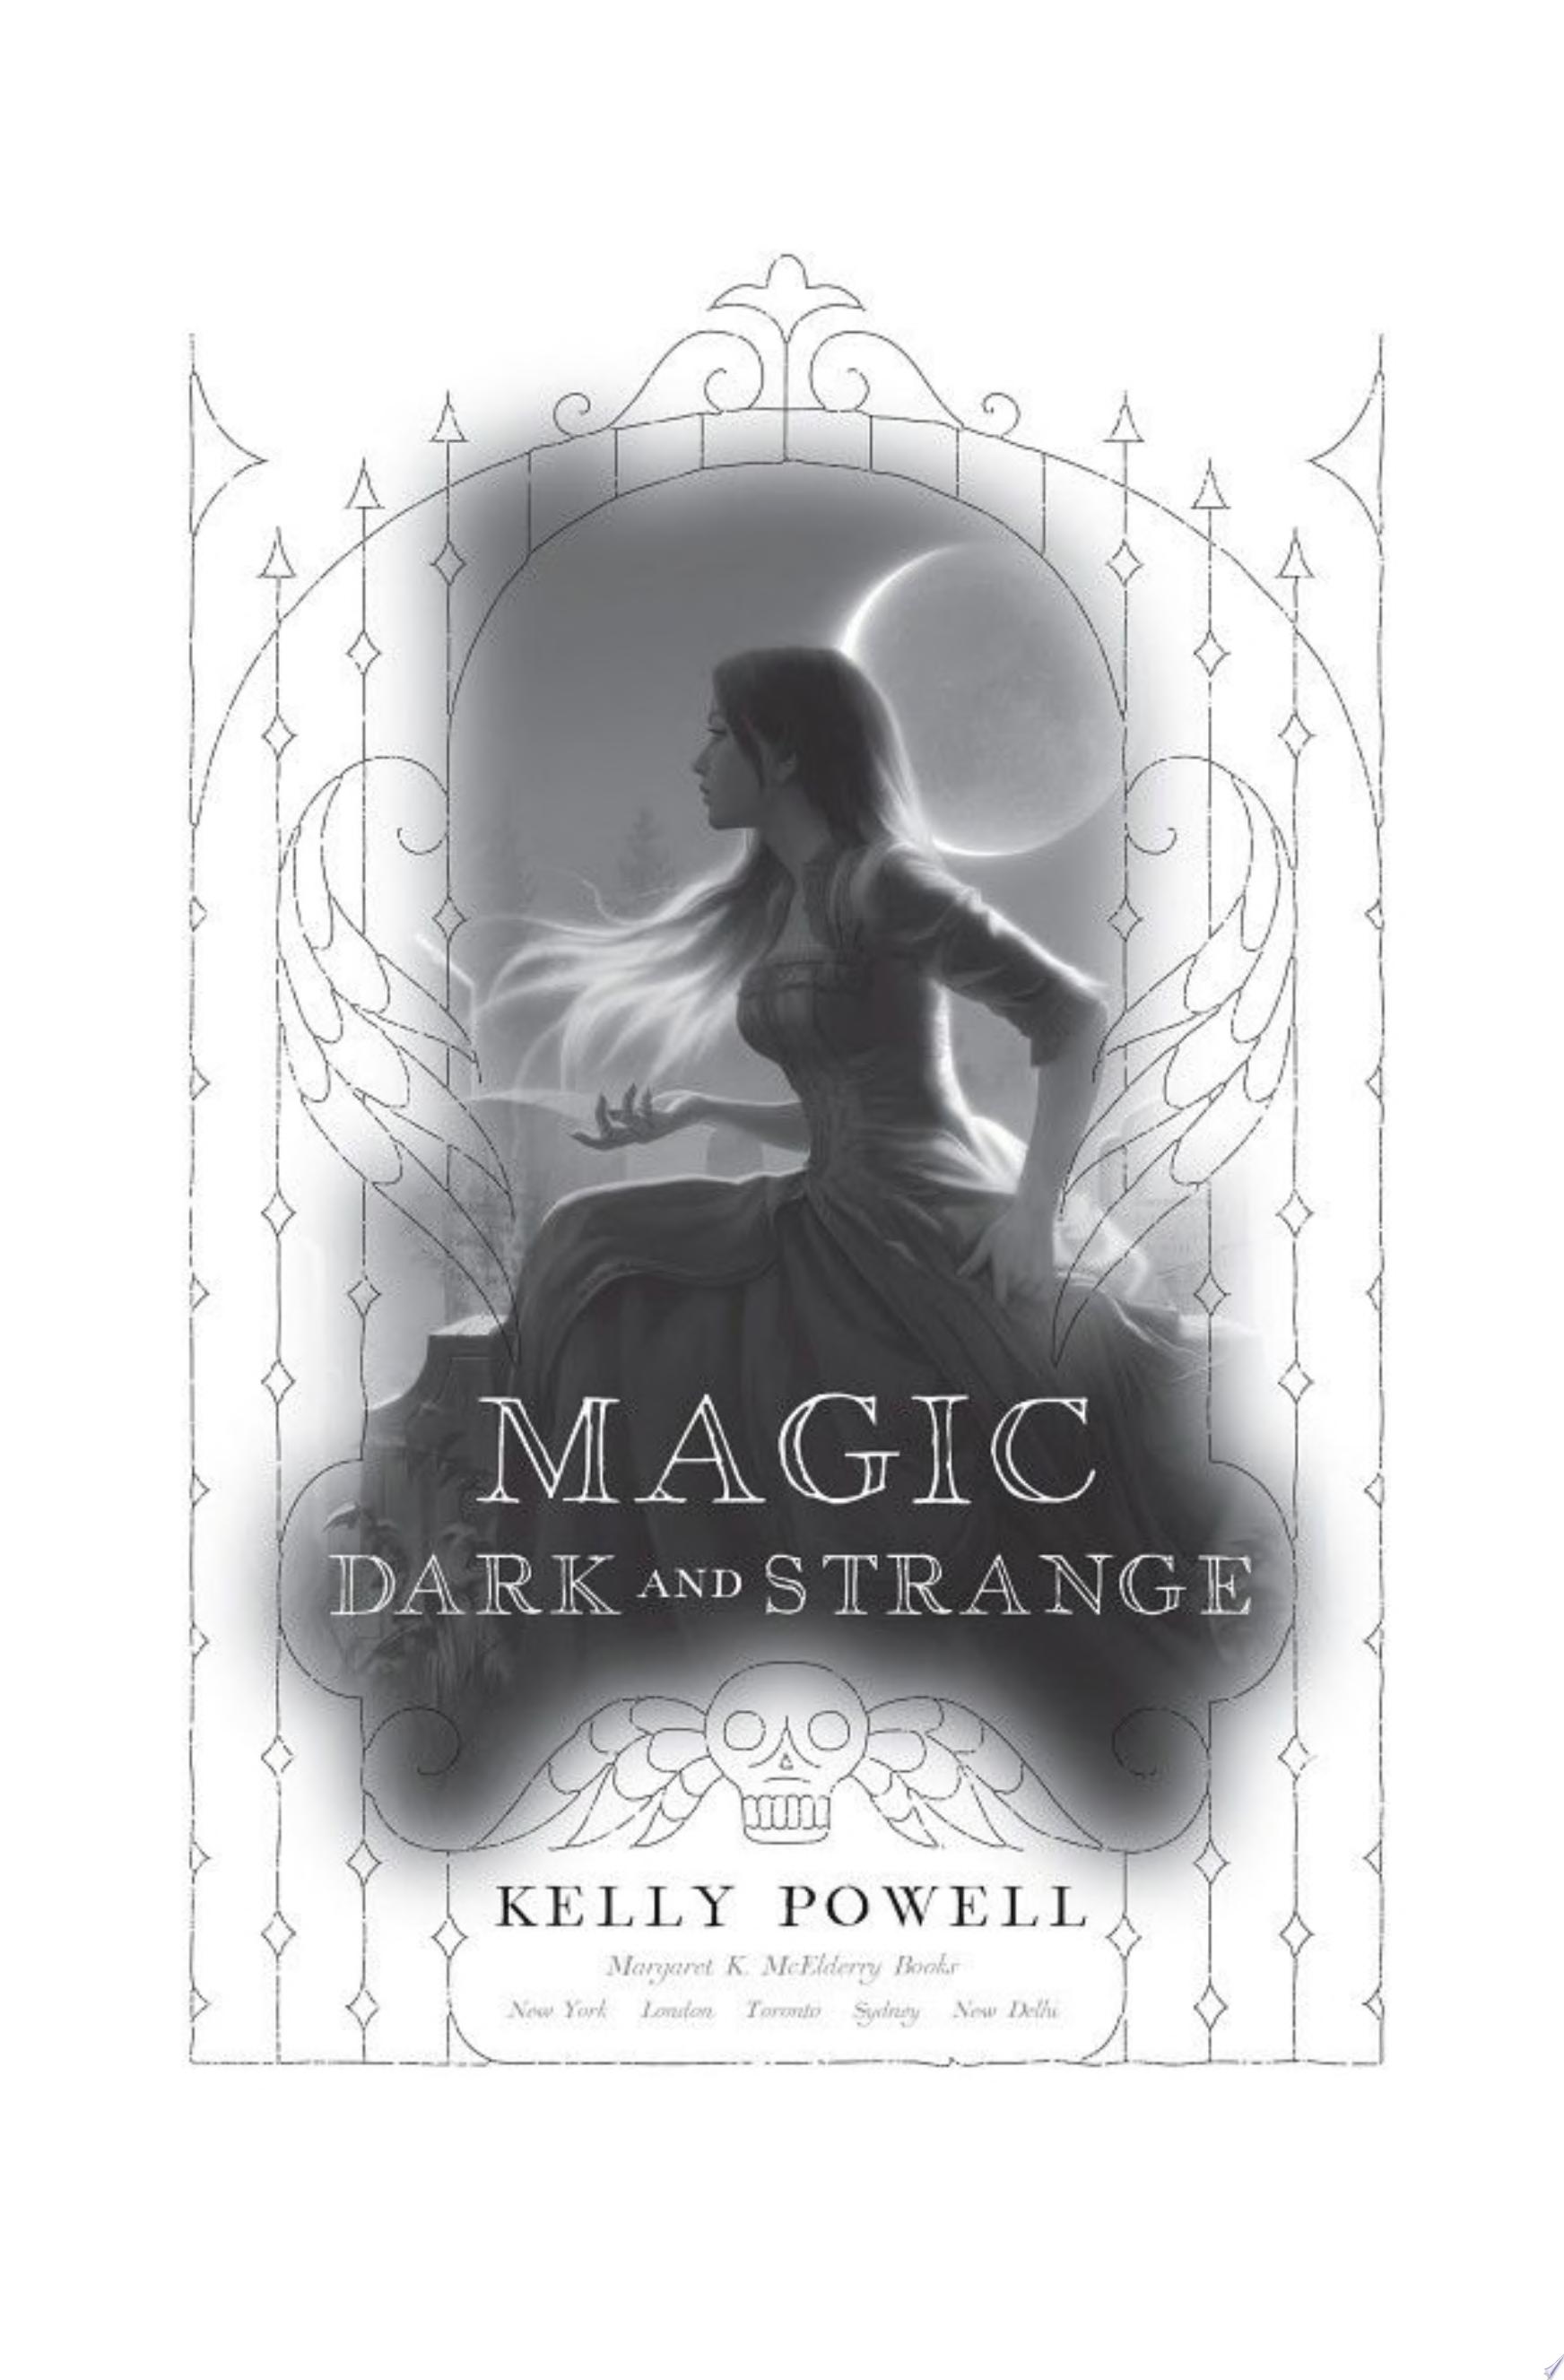 Image for "Magic Dark and Strange"